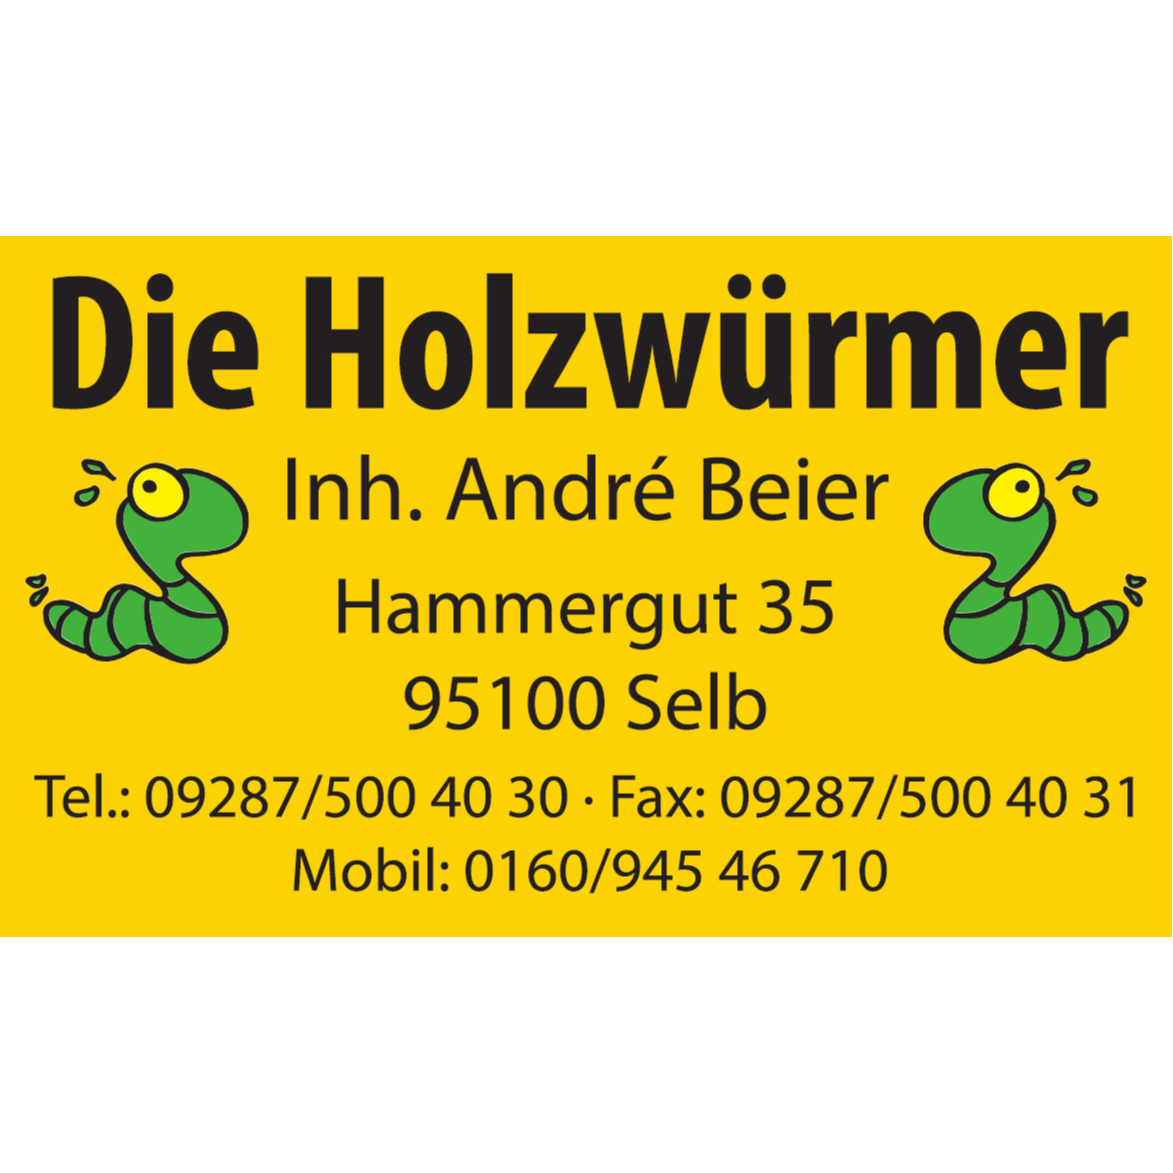 Die Holzwürmer Inh. Andrè Beier in Selb - Logo